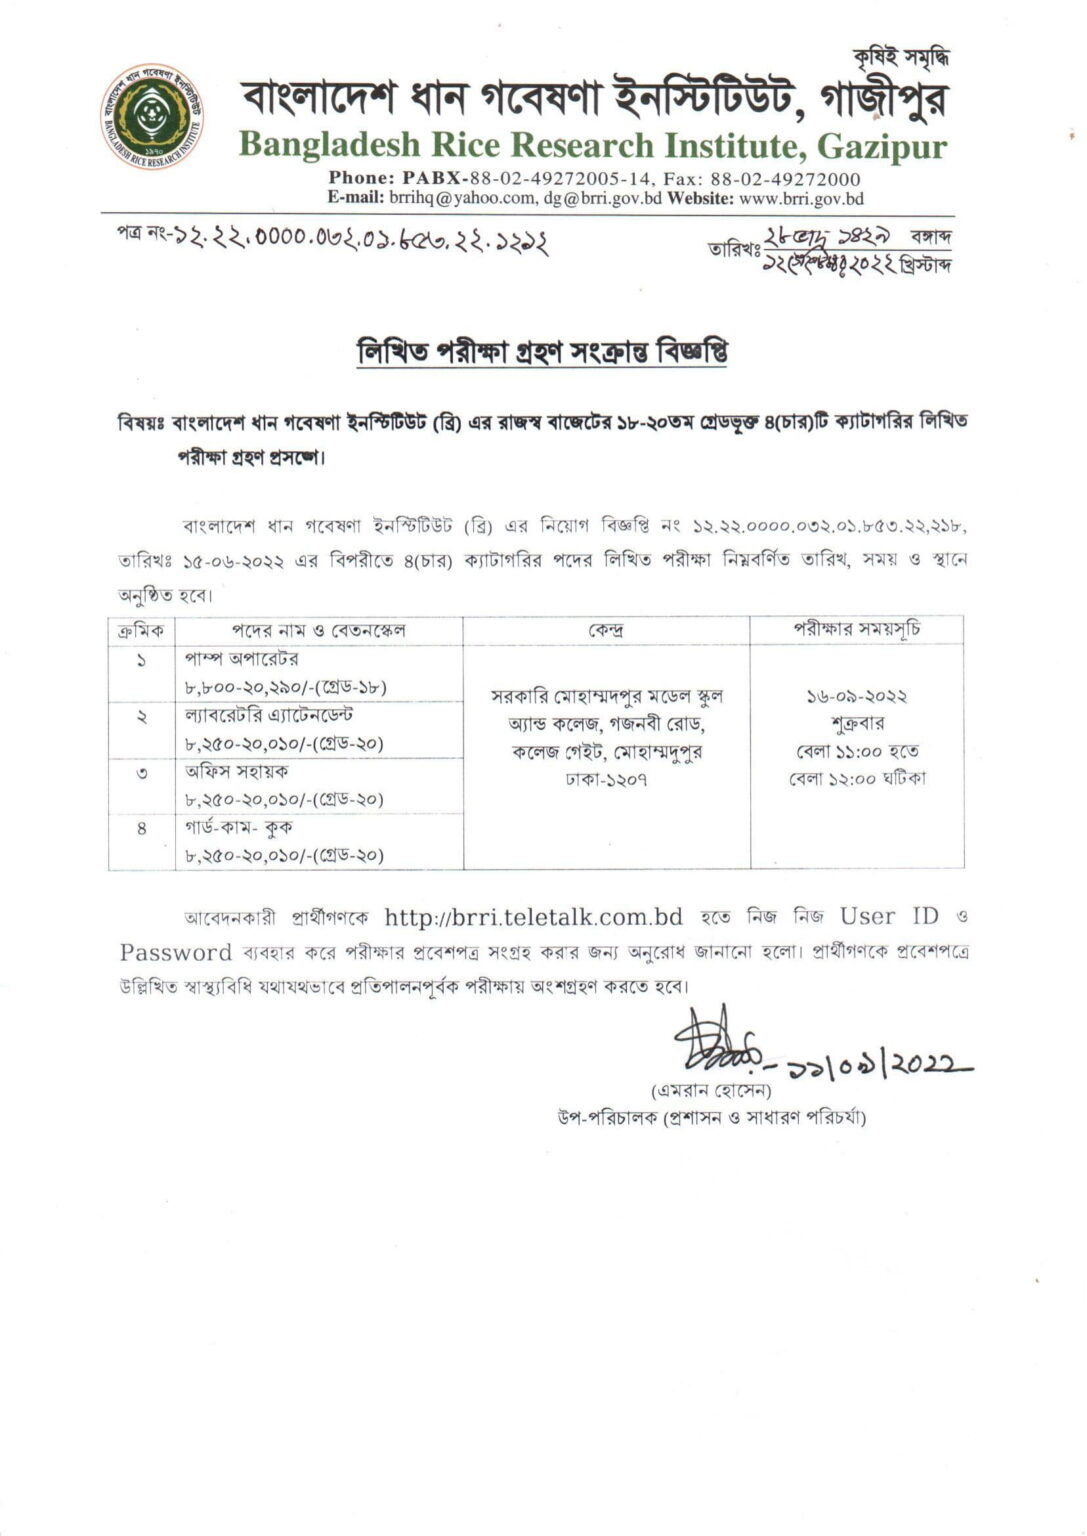 Bangladesh-Rice-Research-Institute-New-Exam-Seat-Plan-2022-PDF-1-1087x1536